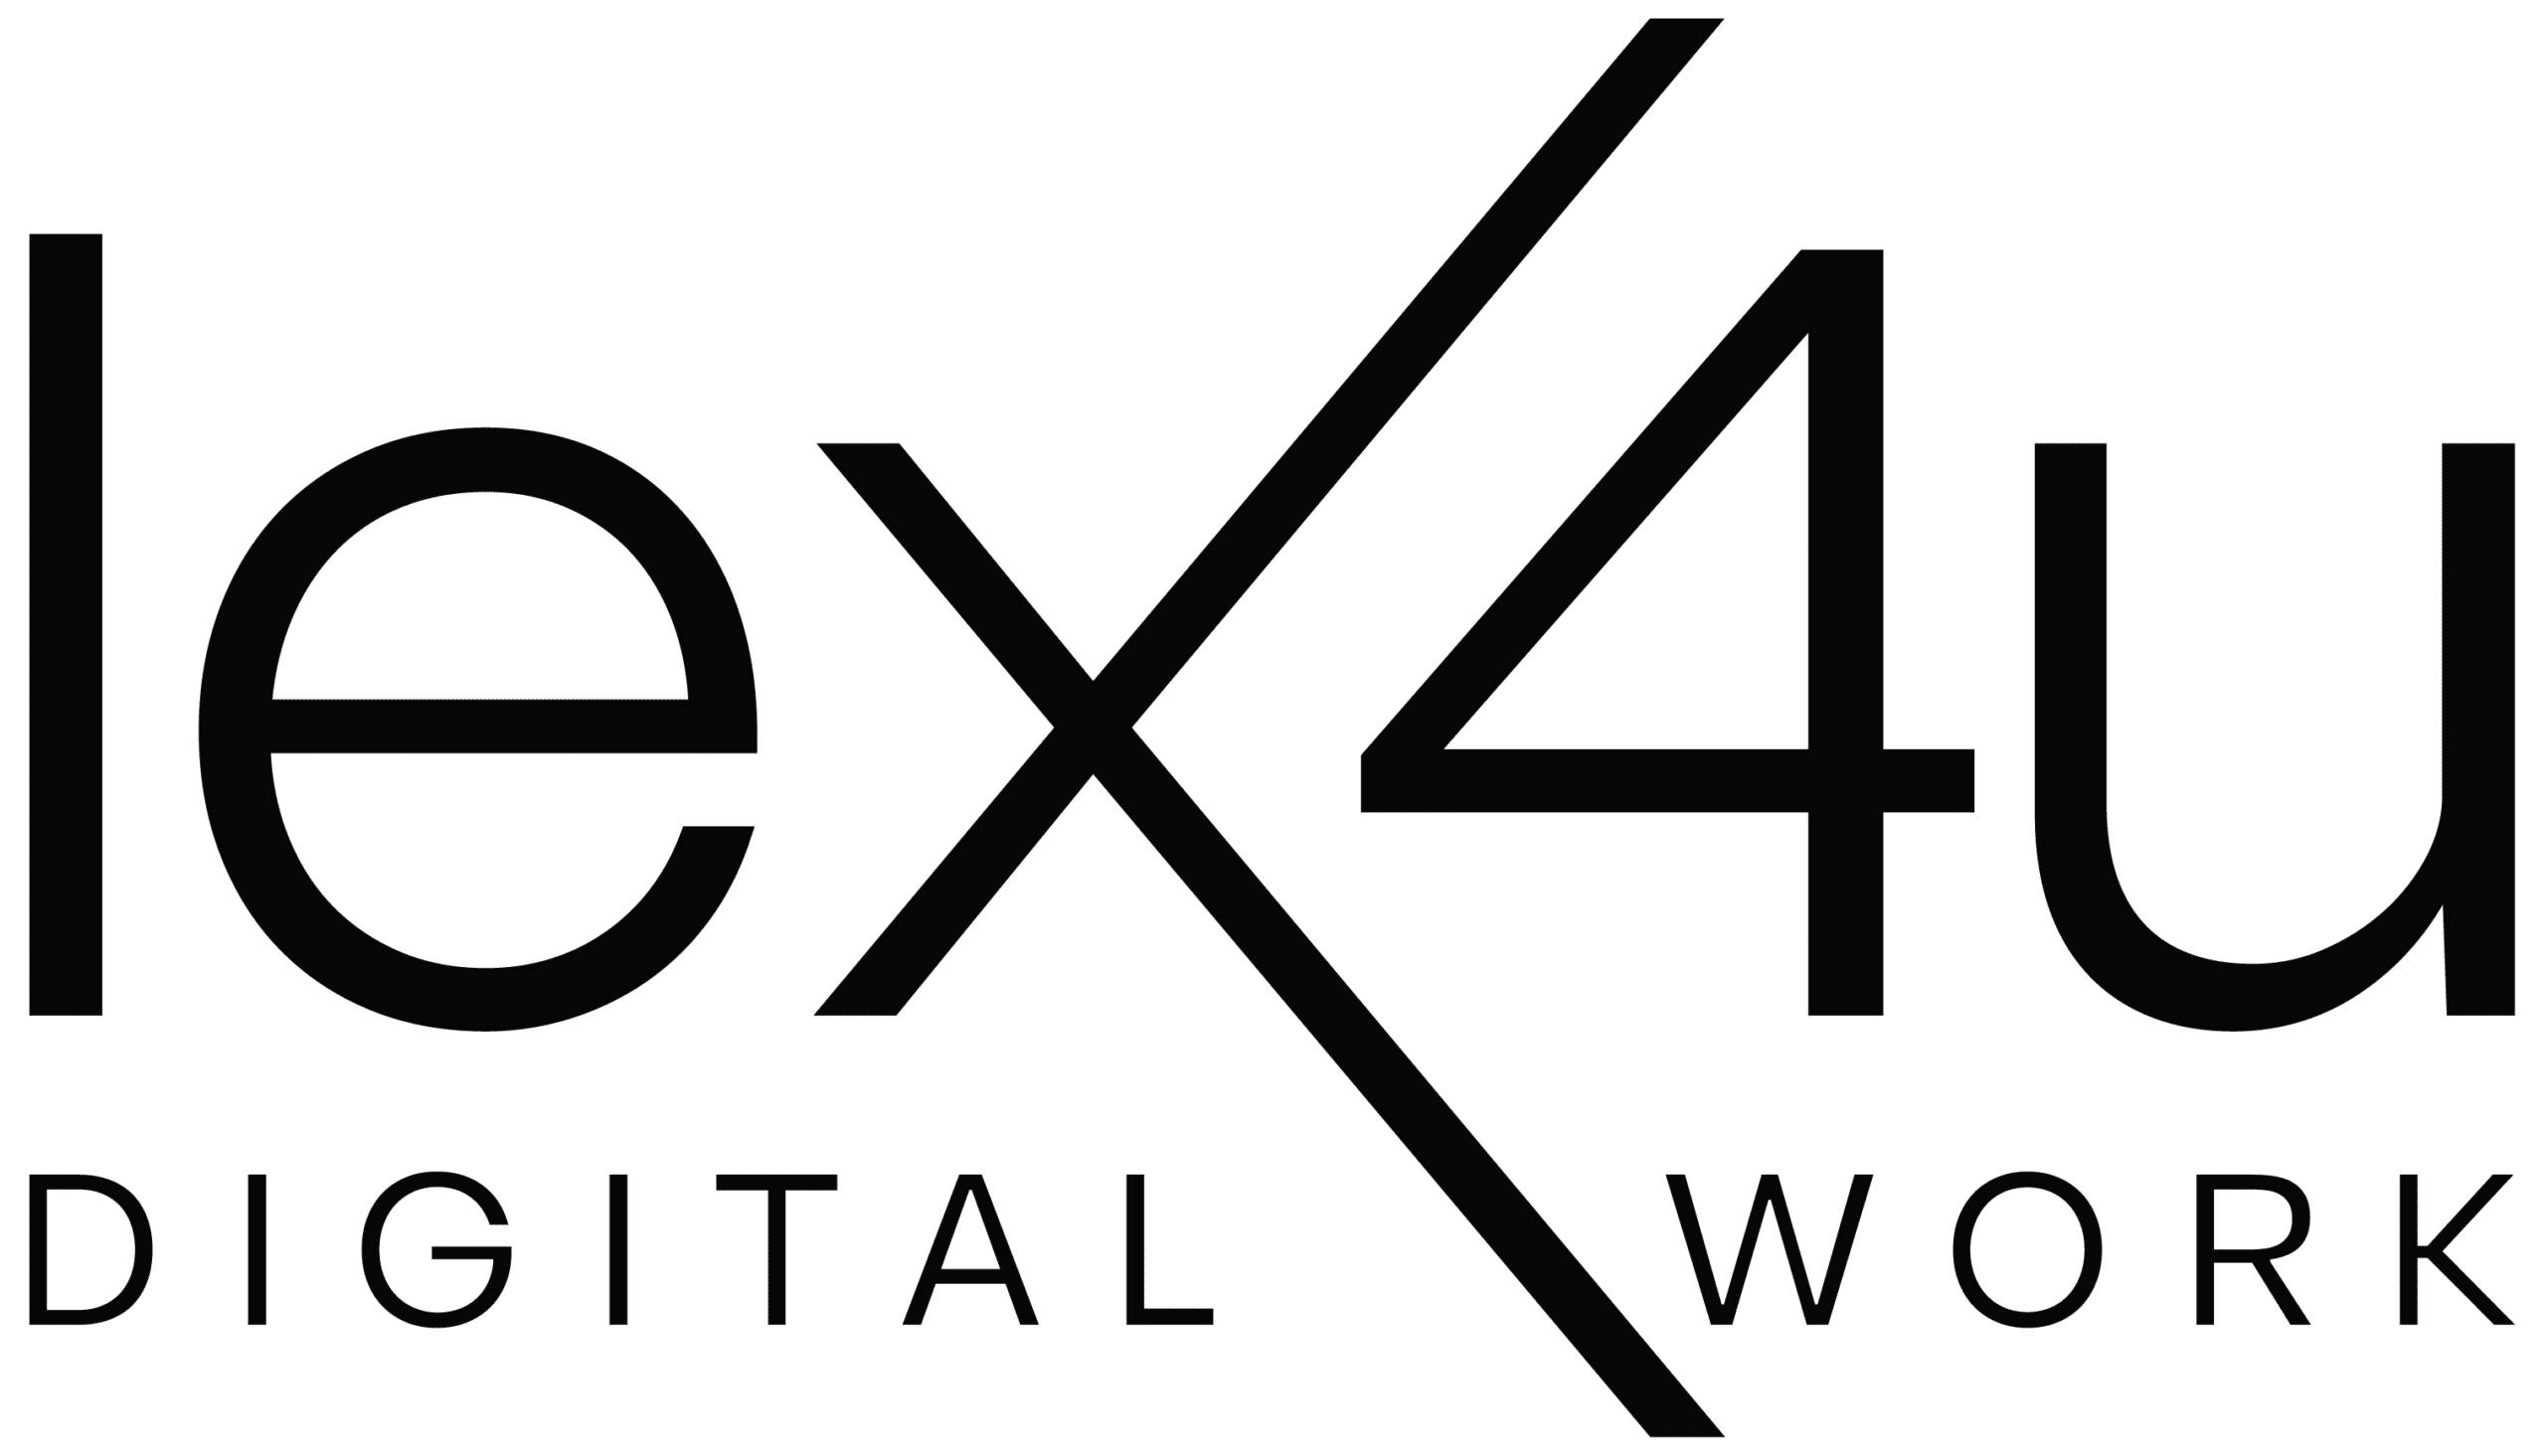 Logo Lex4u Digital Work noir